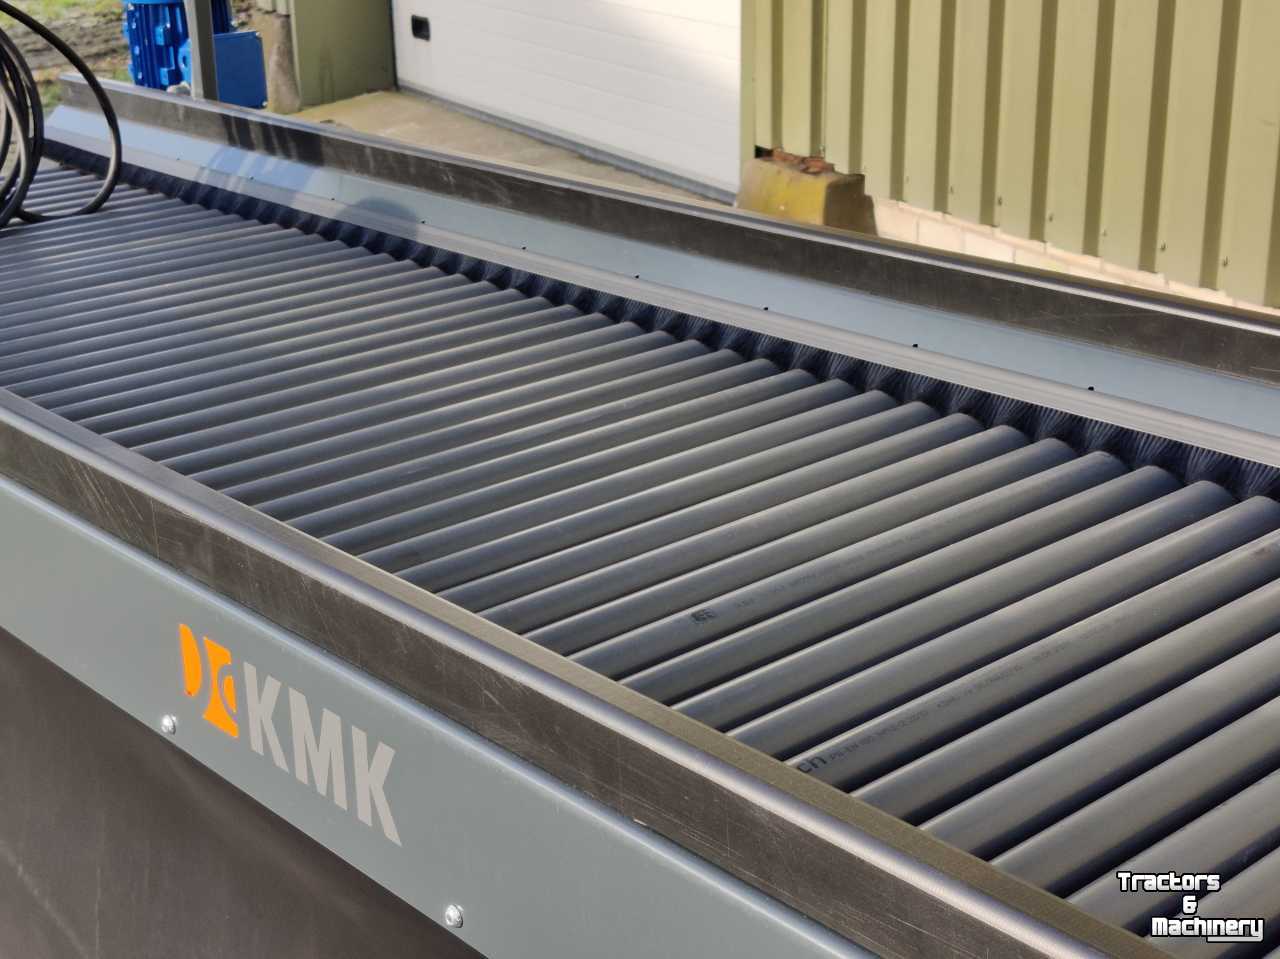 Inspection units KMK TR 2506 spruiten leestafel | verlesetisch Rosenkohl